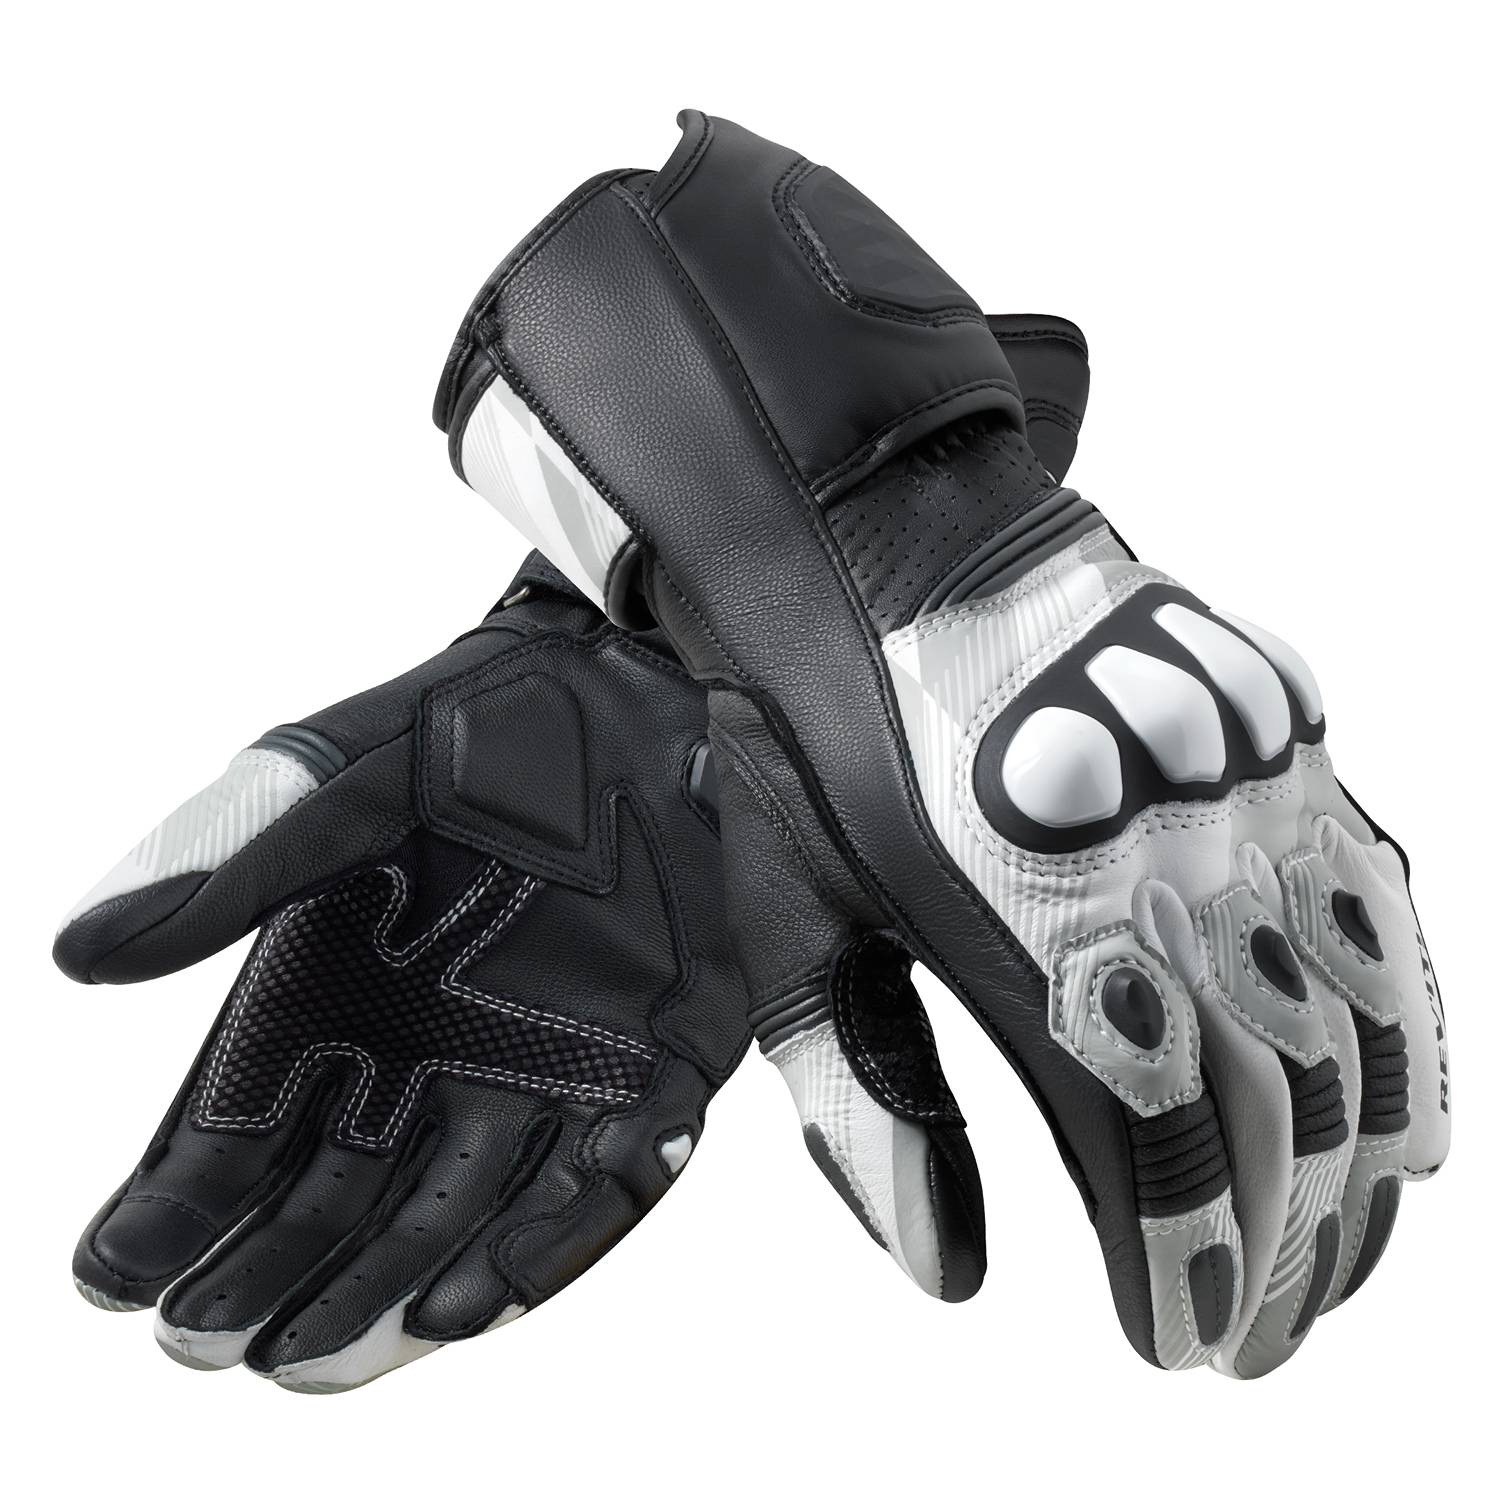 Image of REV'IT! League 2 Gloves Black Grey Size XL ID 8700001360692